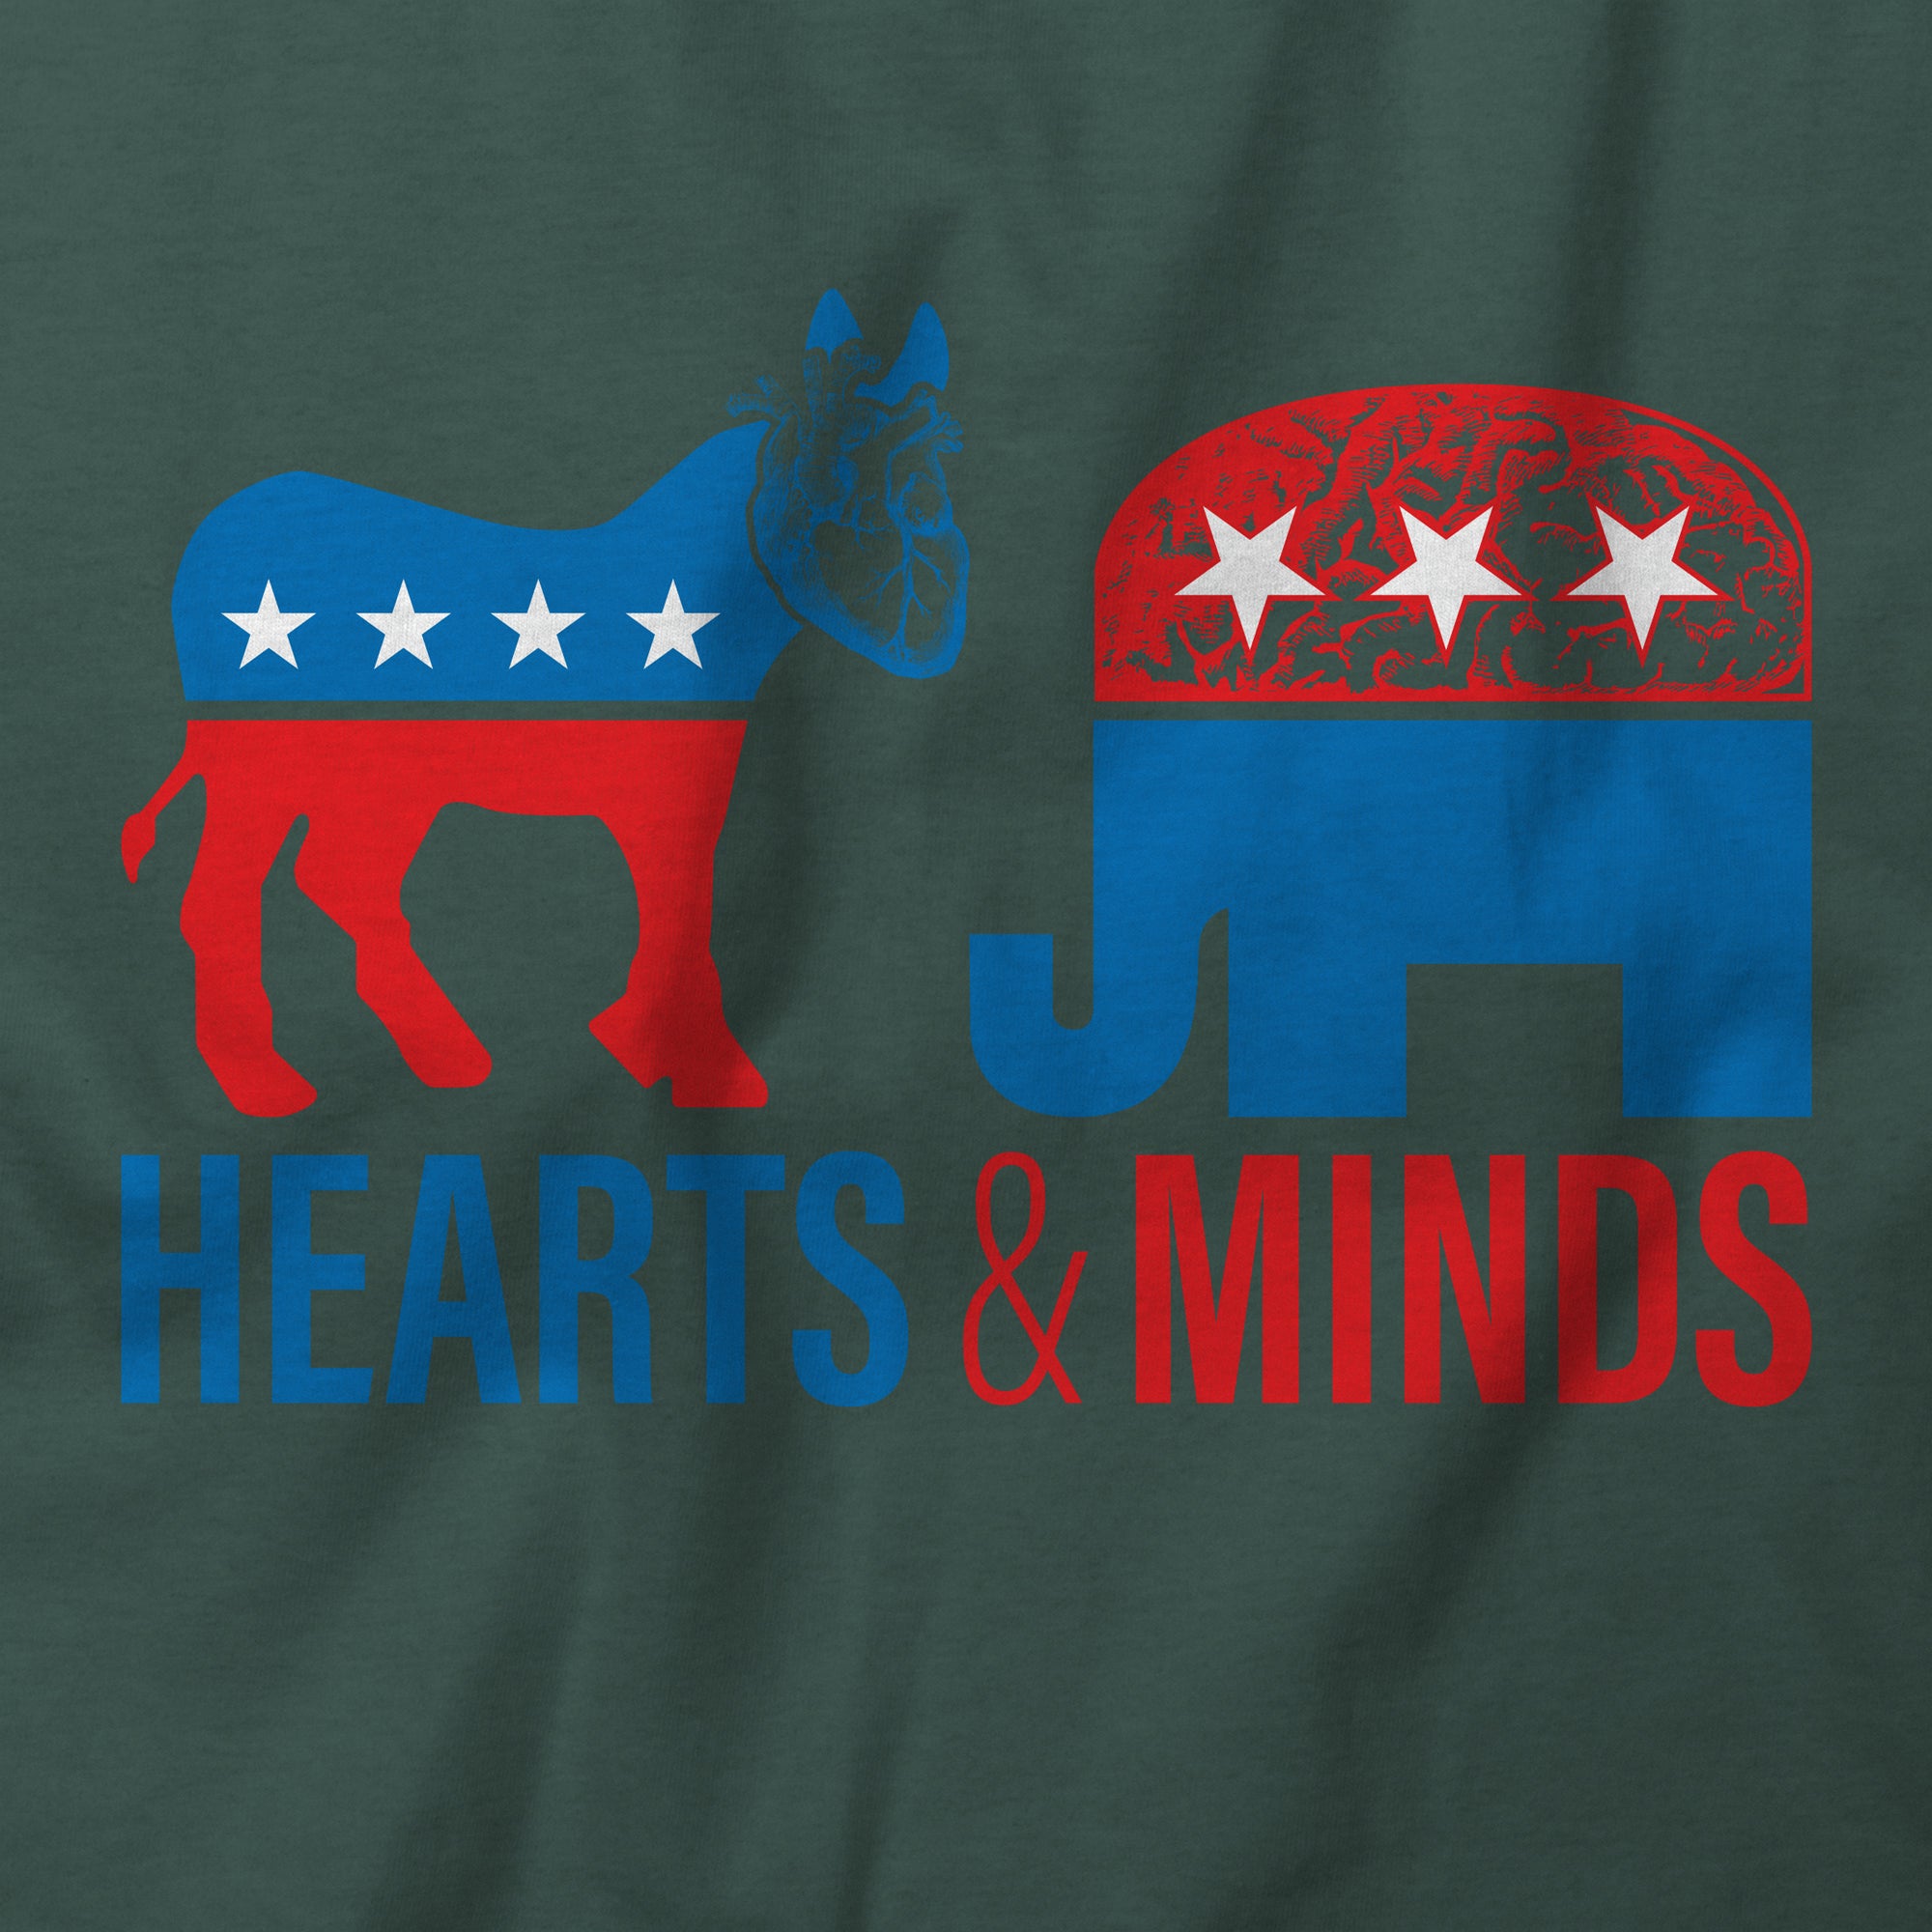 Hearts & Minds T-Shirt